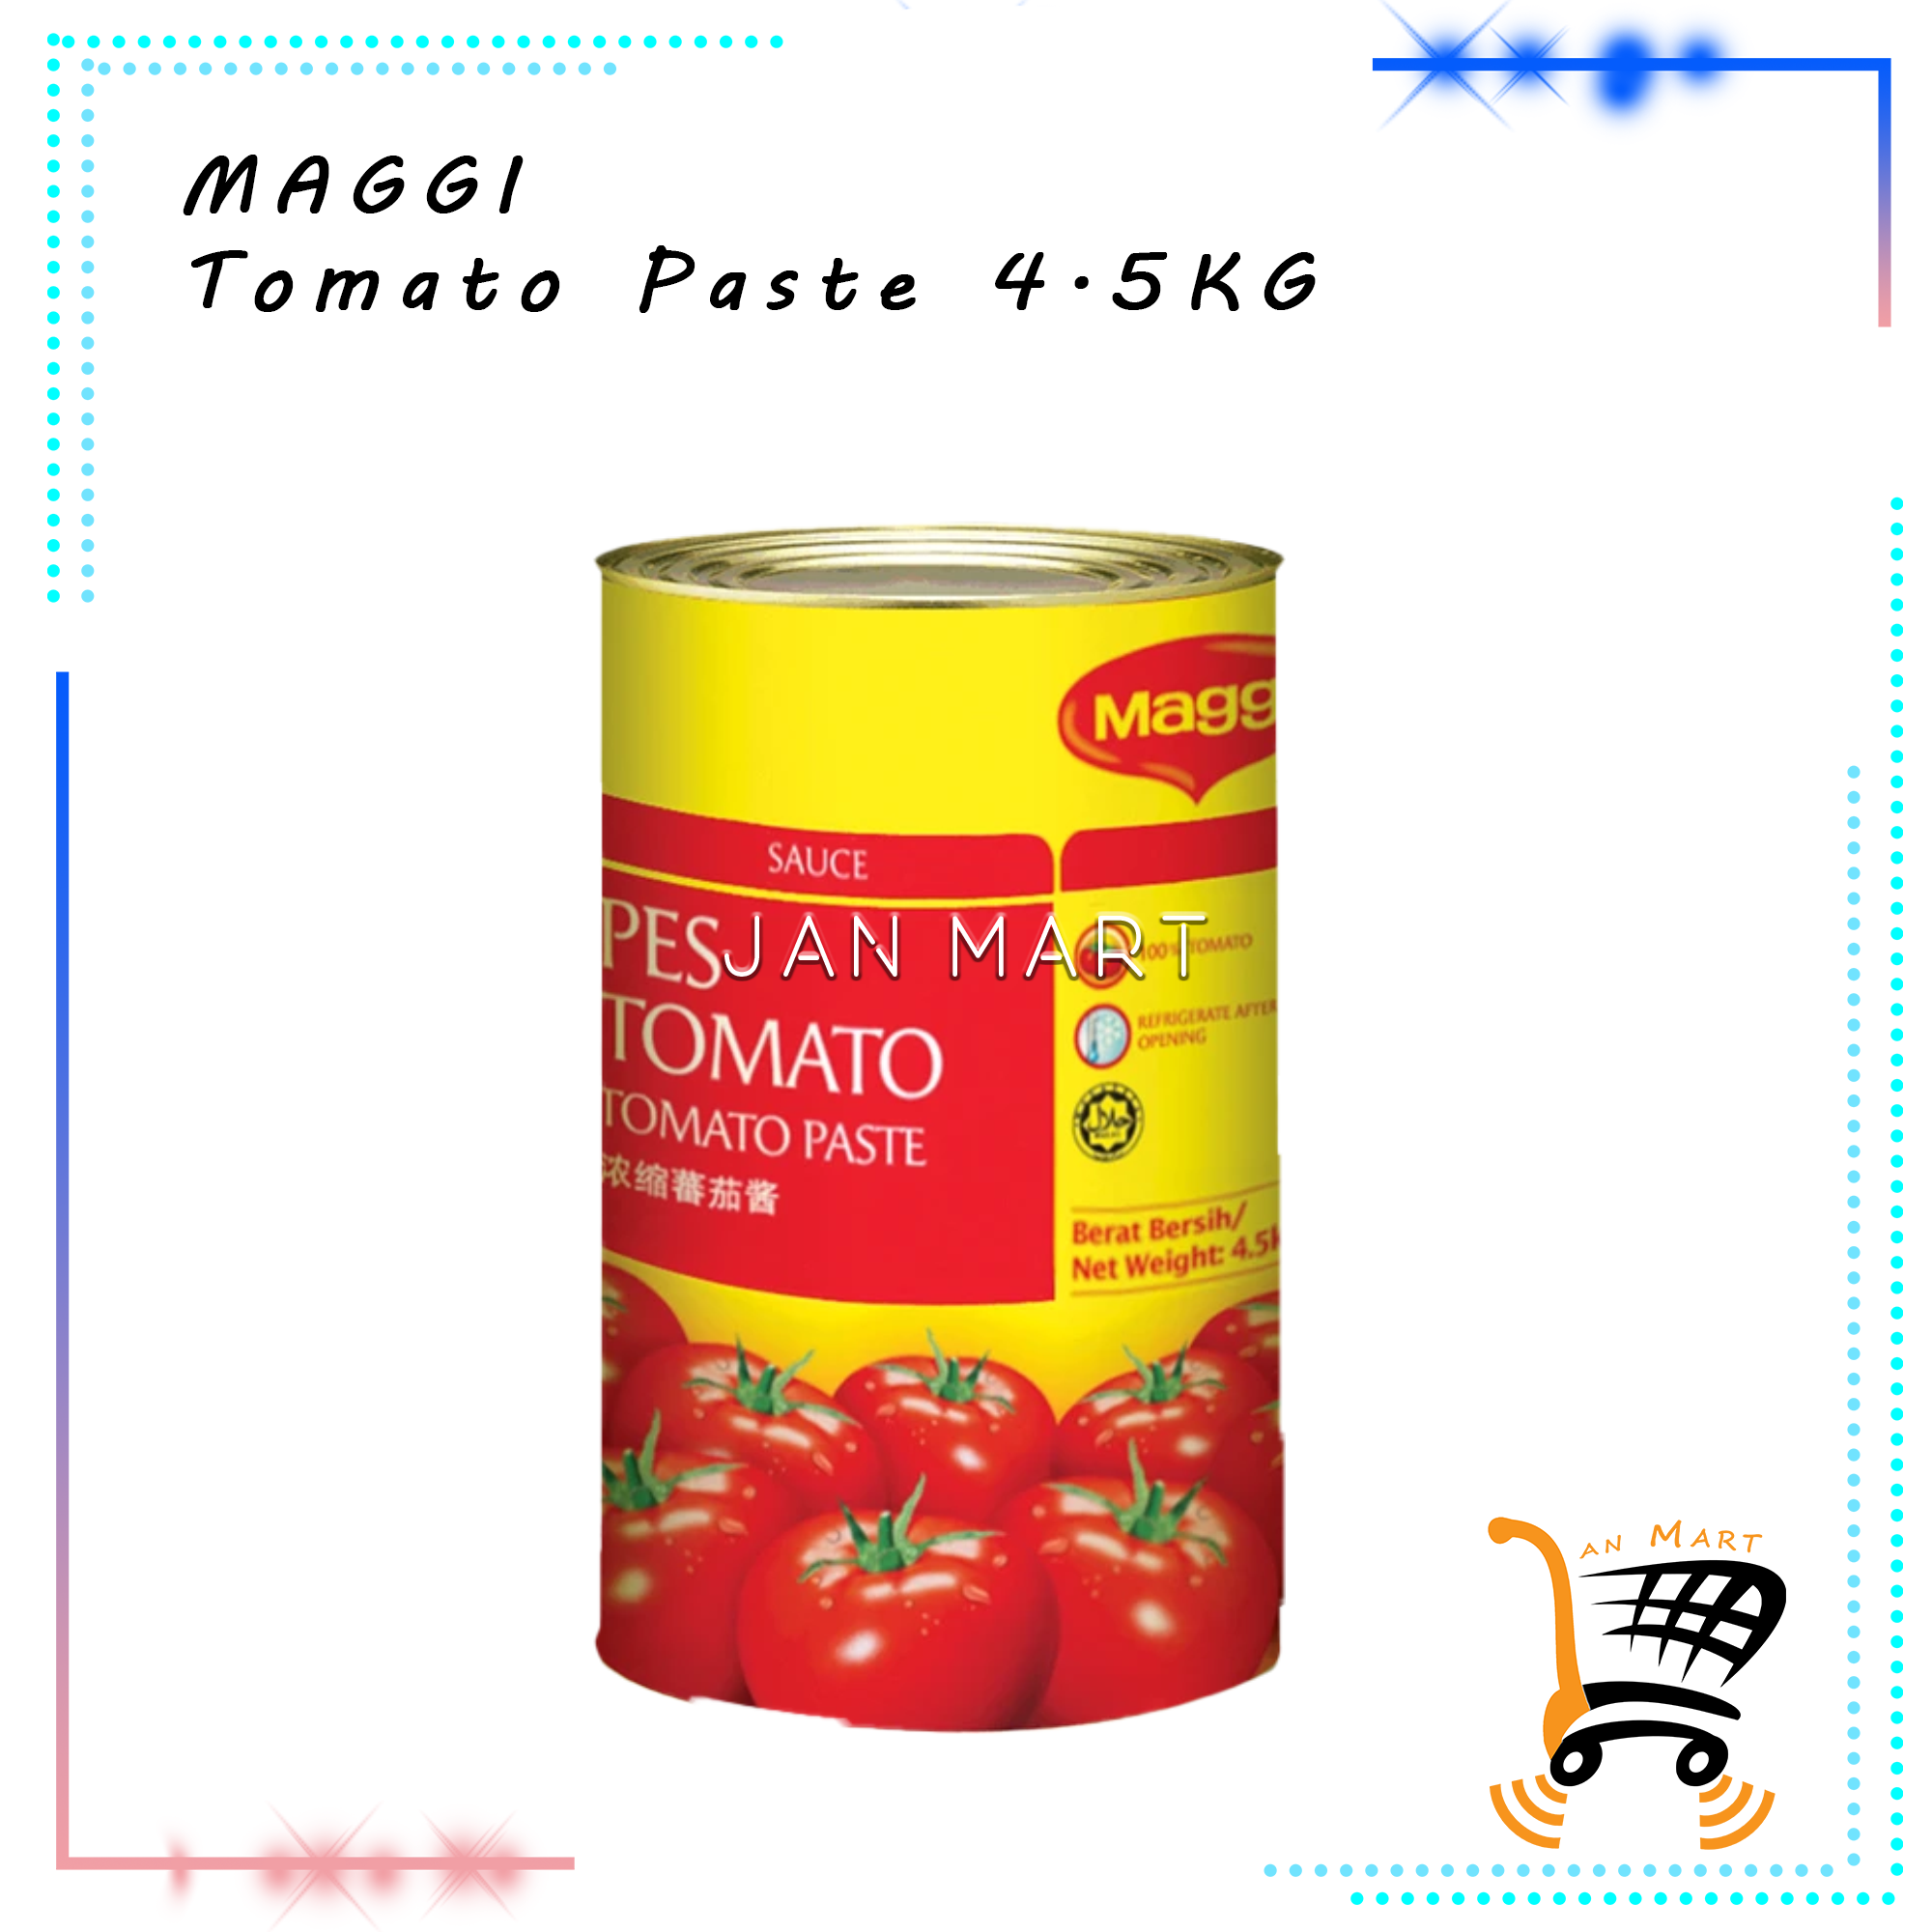 MAGGI Tomato Paste 4.5KG